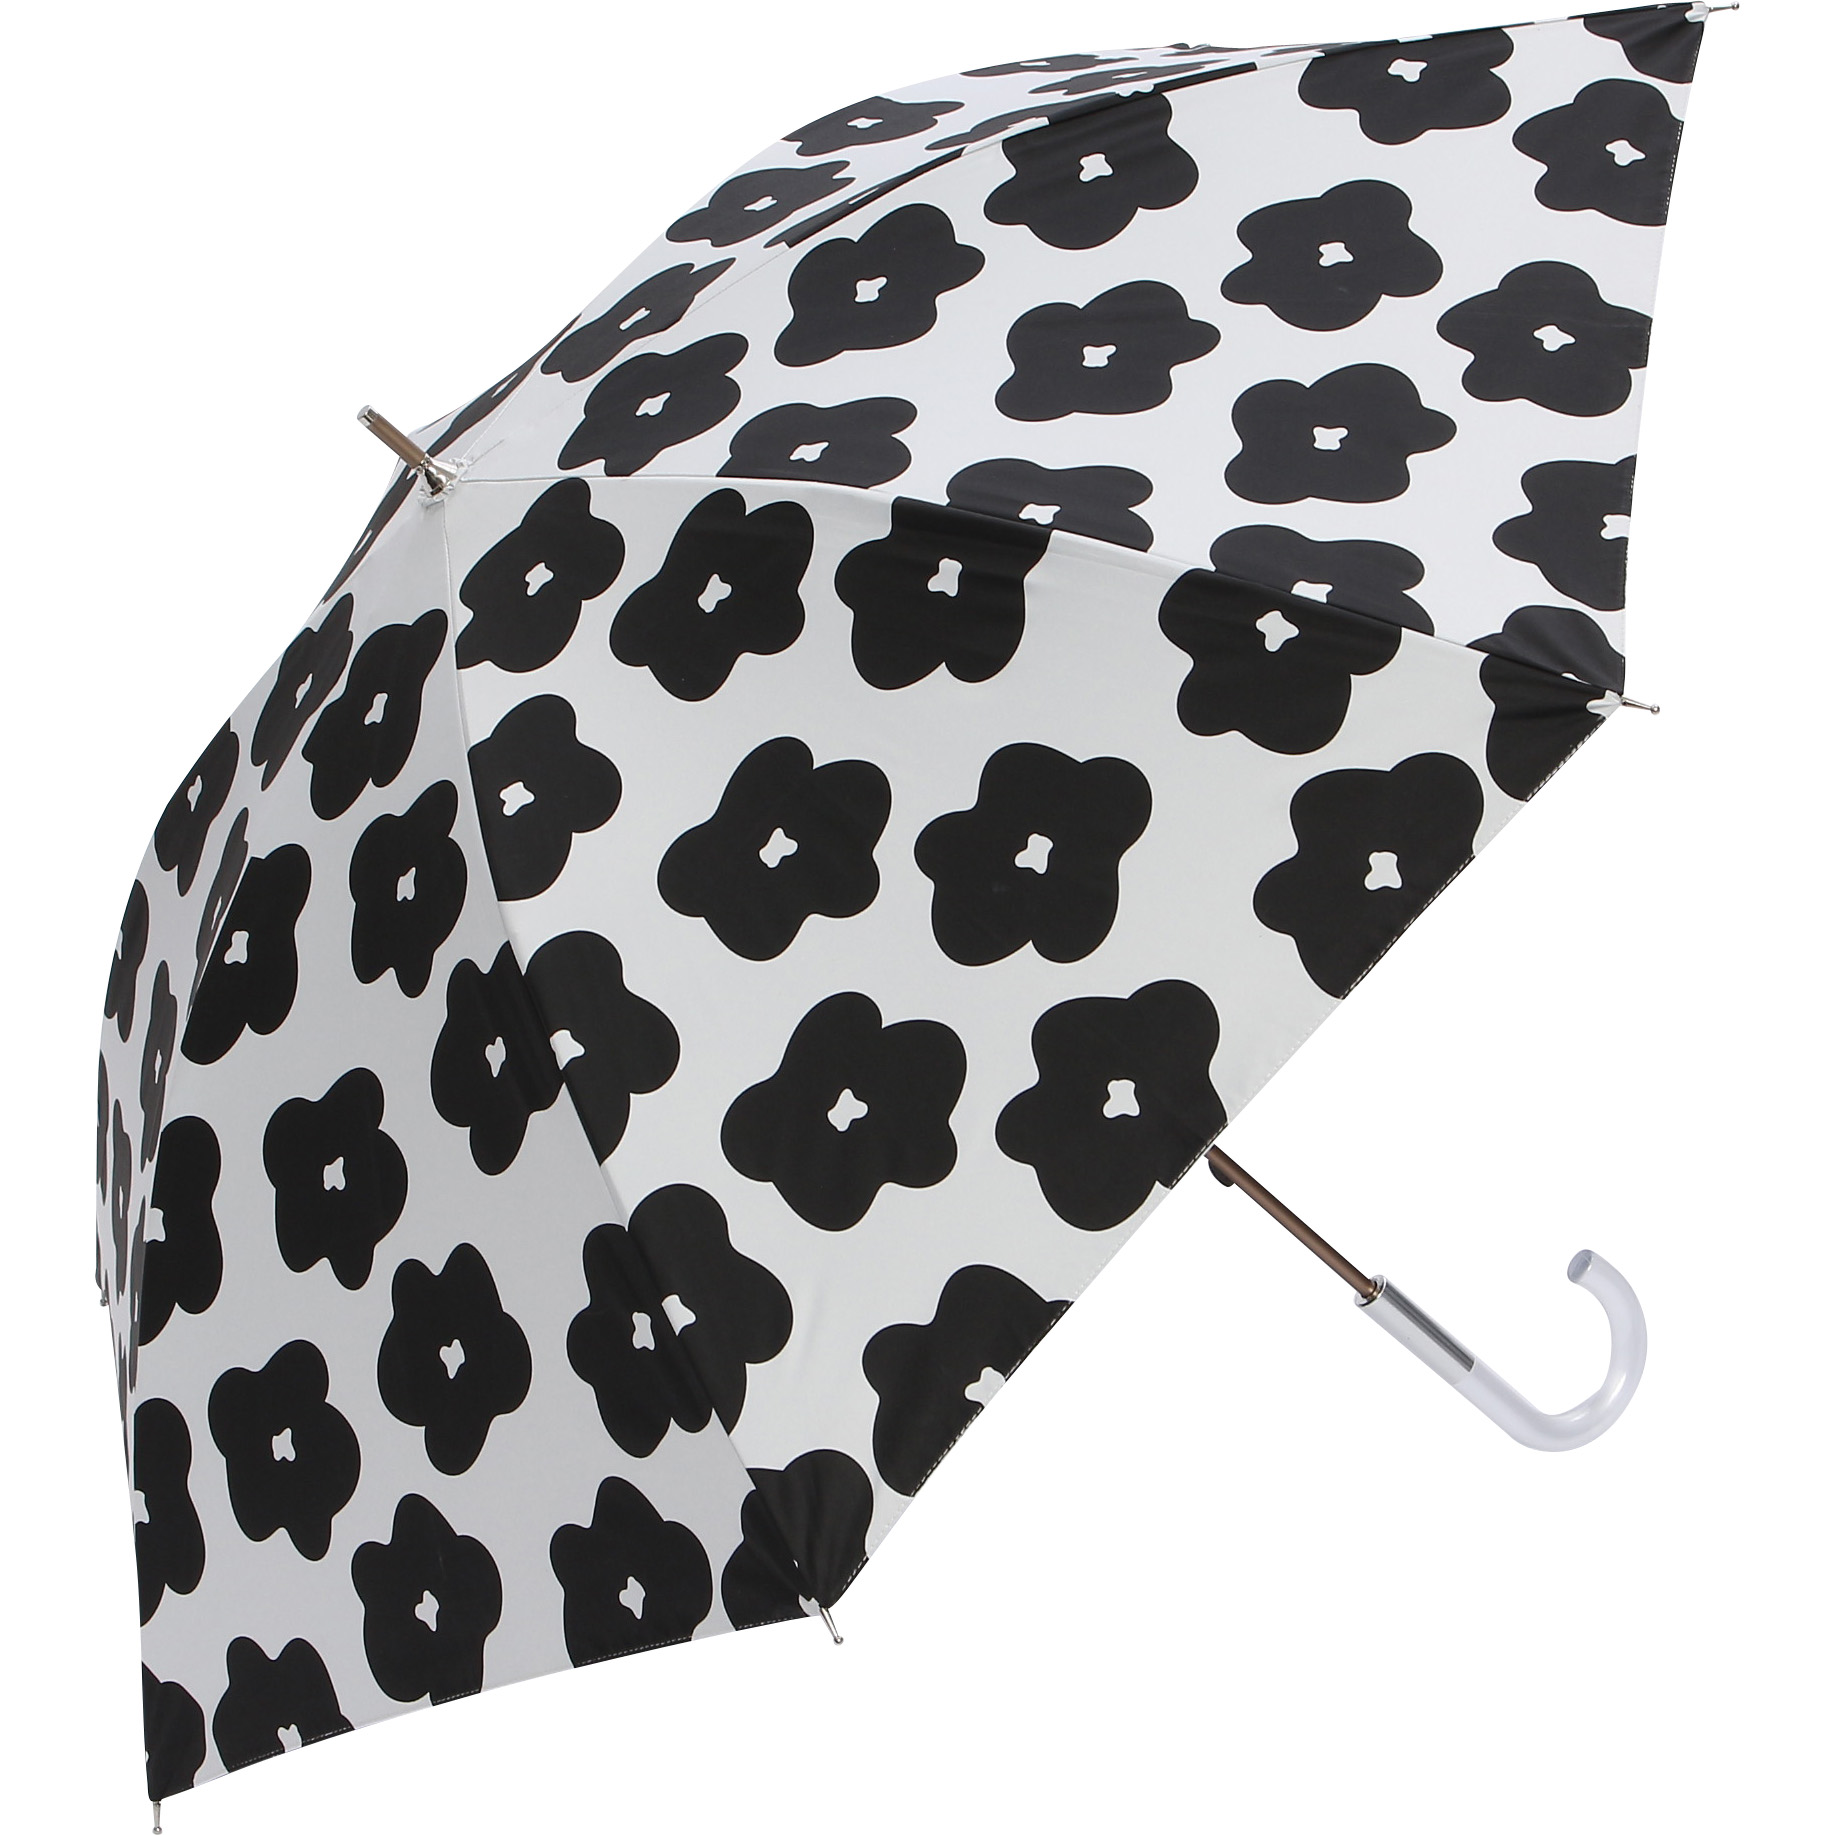 a.s.s.a 公式 日傘 完全遮光 レディース 傘 晴雨兼用 紫外線遮蔽 遮光 55cm ブランド...